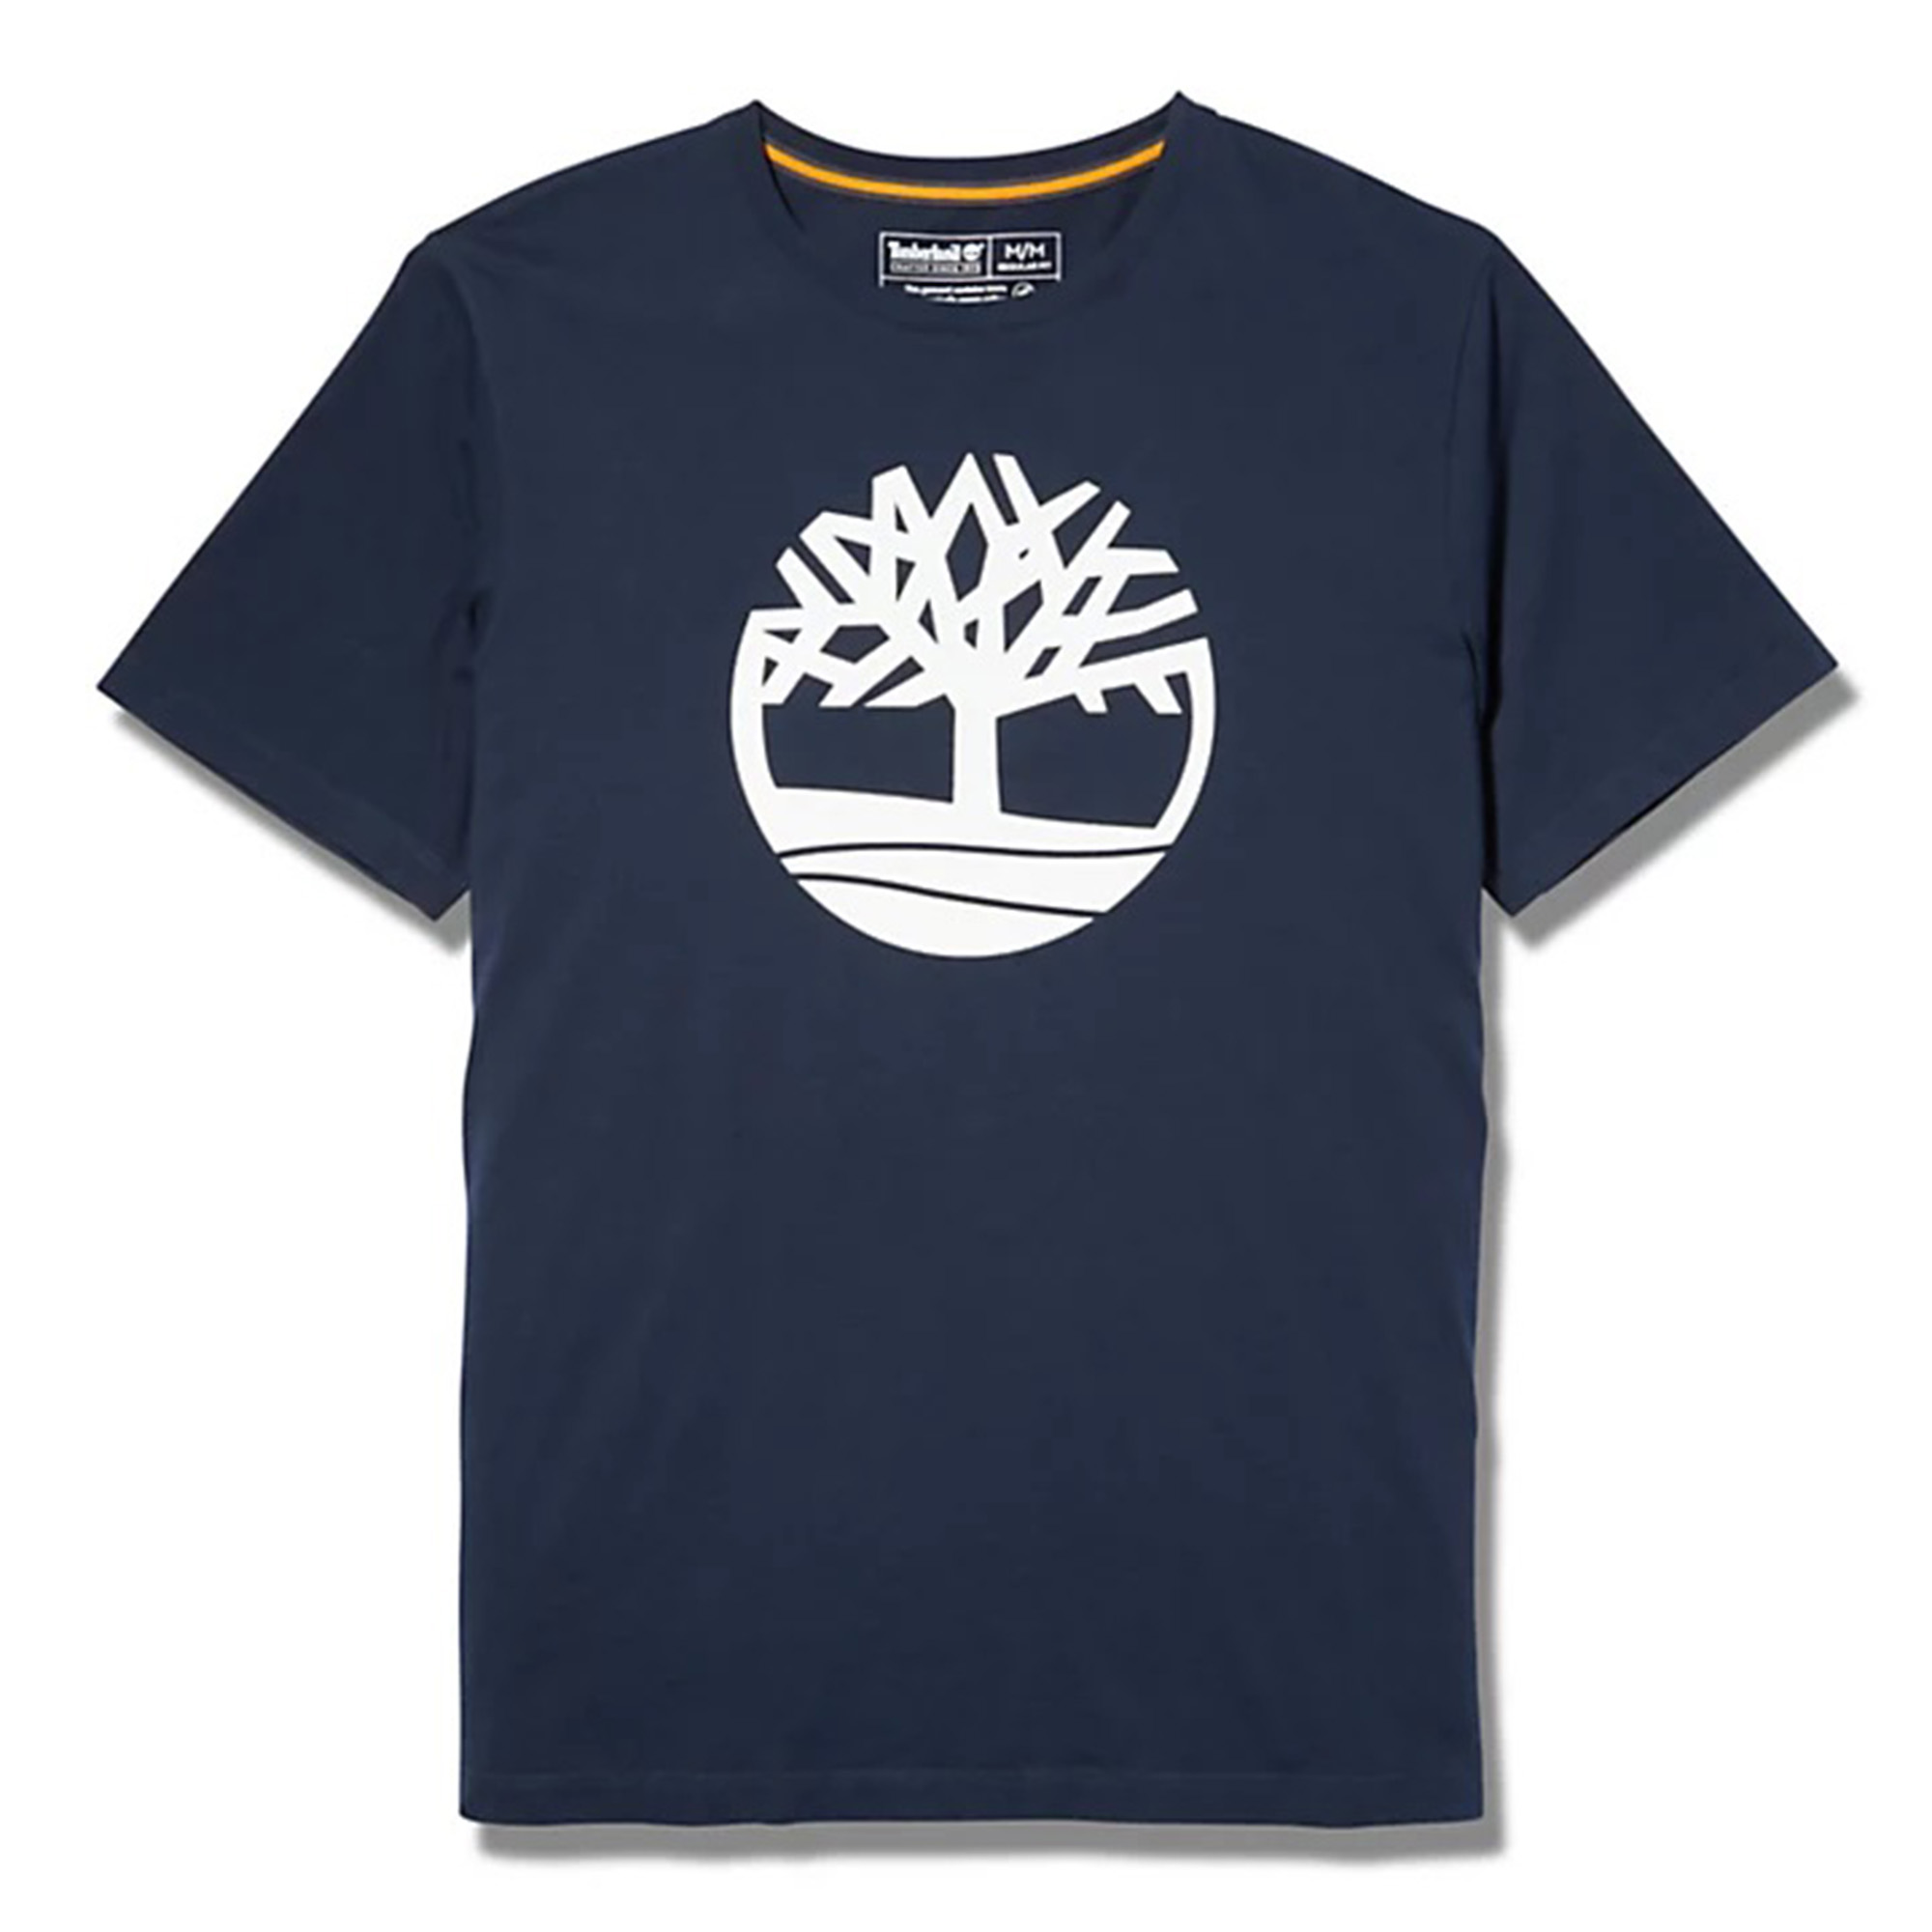 Timberland SS TREE LOGO T Herren T-Shirt Shirt TB0A2C6S blau